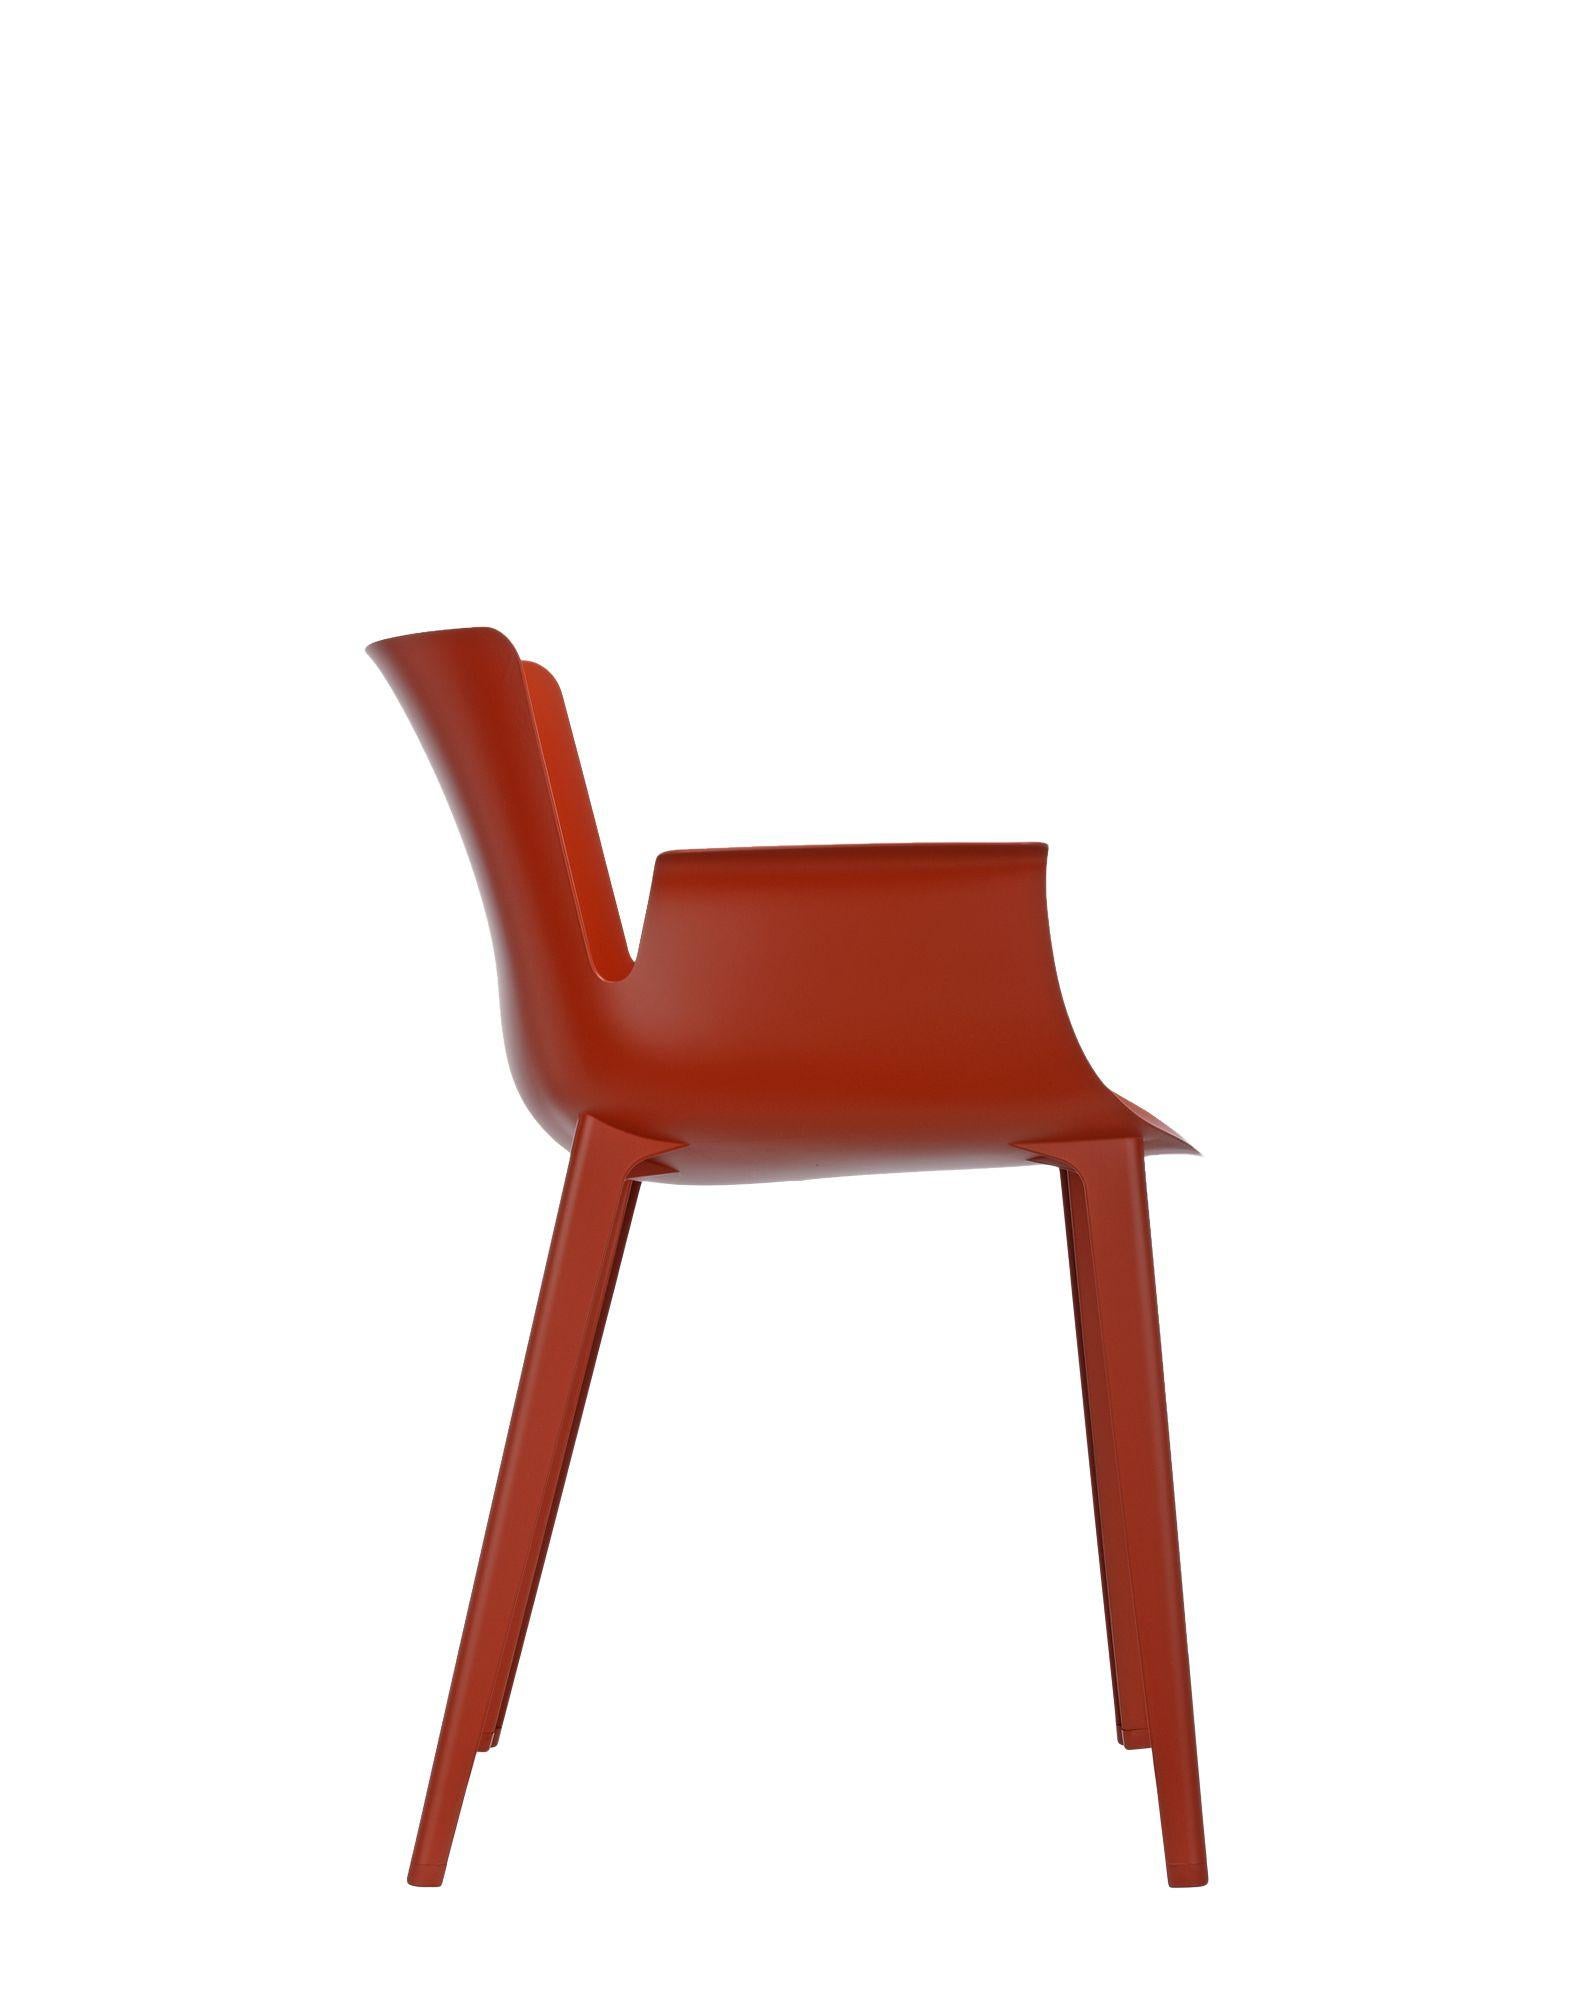 Modern Kartell Piuma Chair in Rusty Orange by Piero Lissoni For Sale